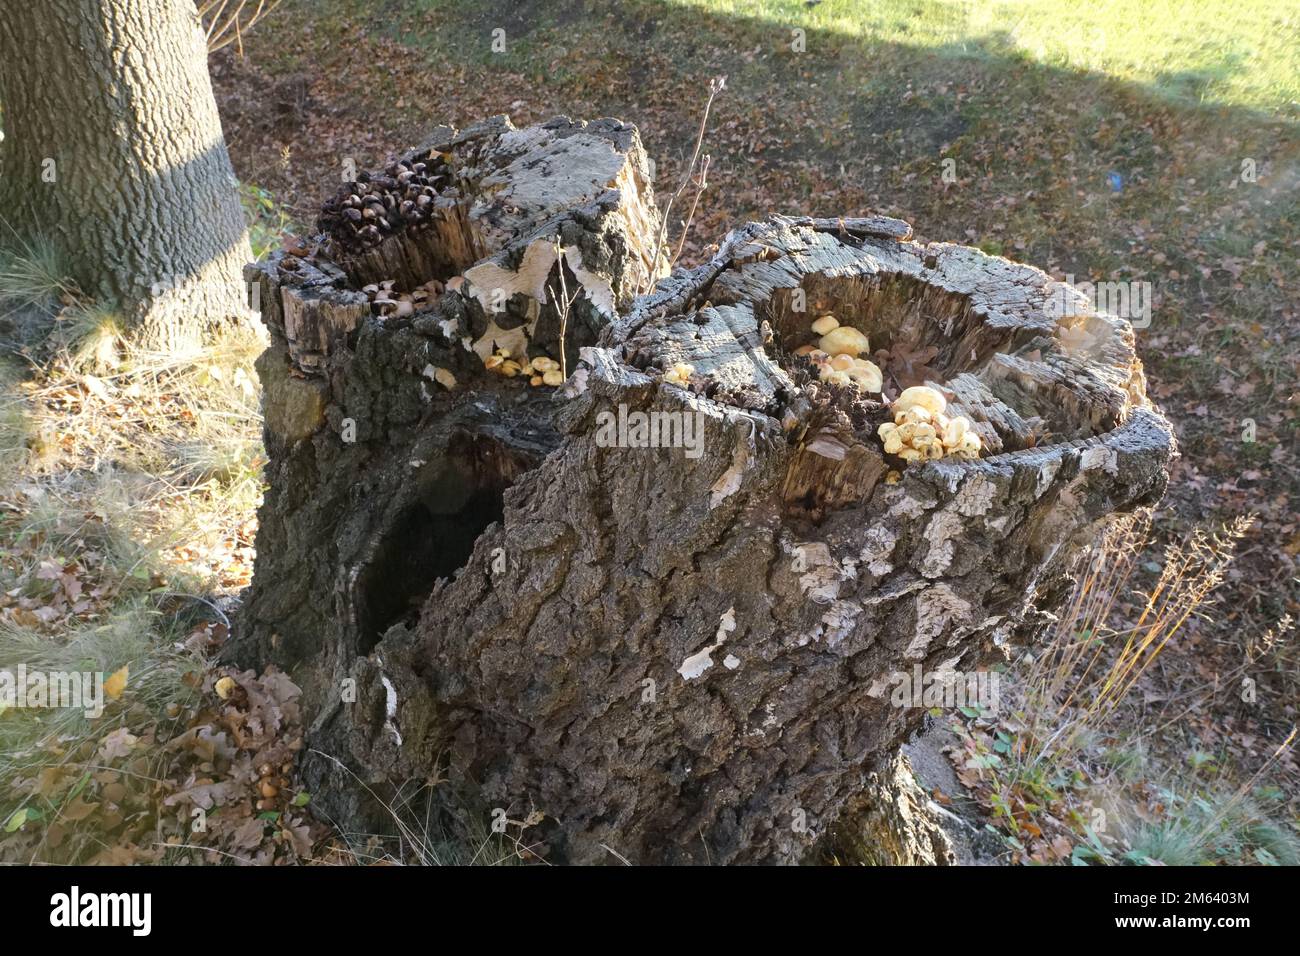 Pilzgruppe im abgestorbenen Baumstumpf Foto Stock